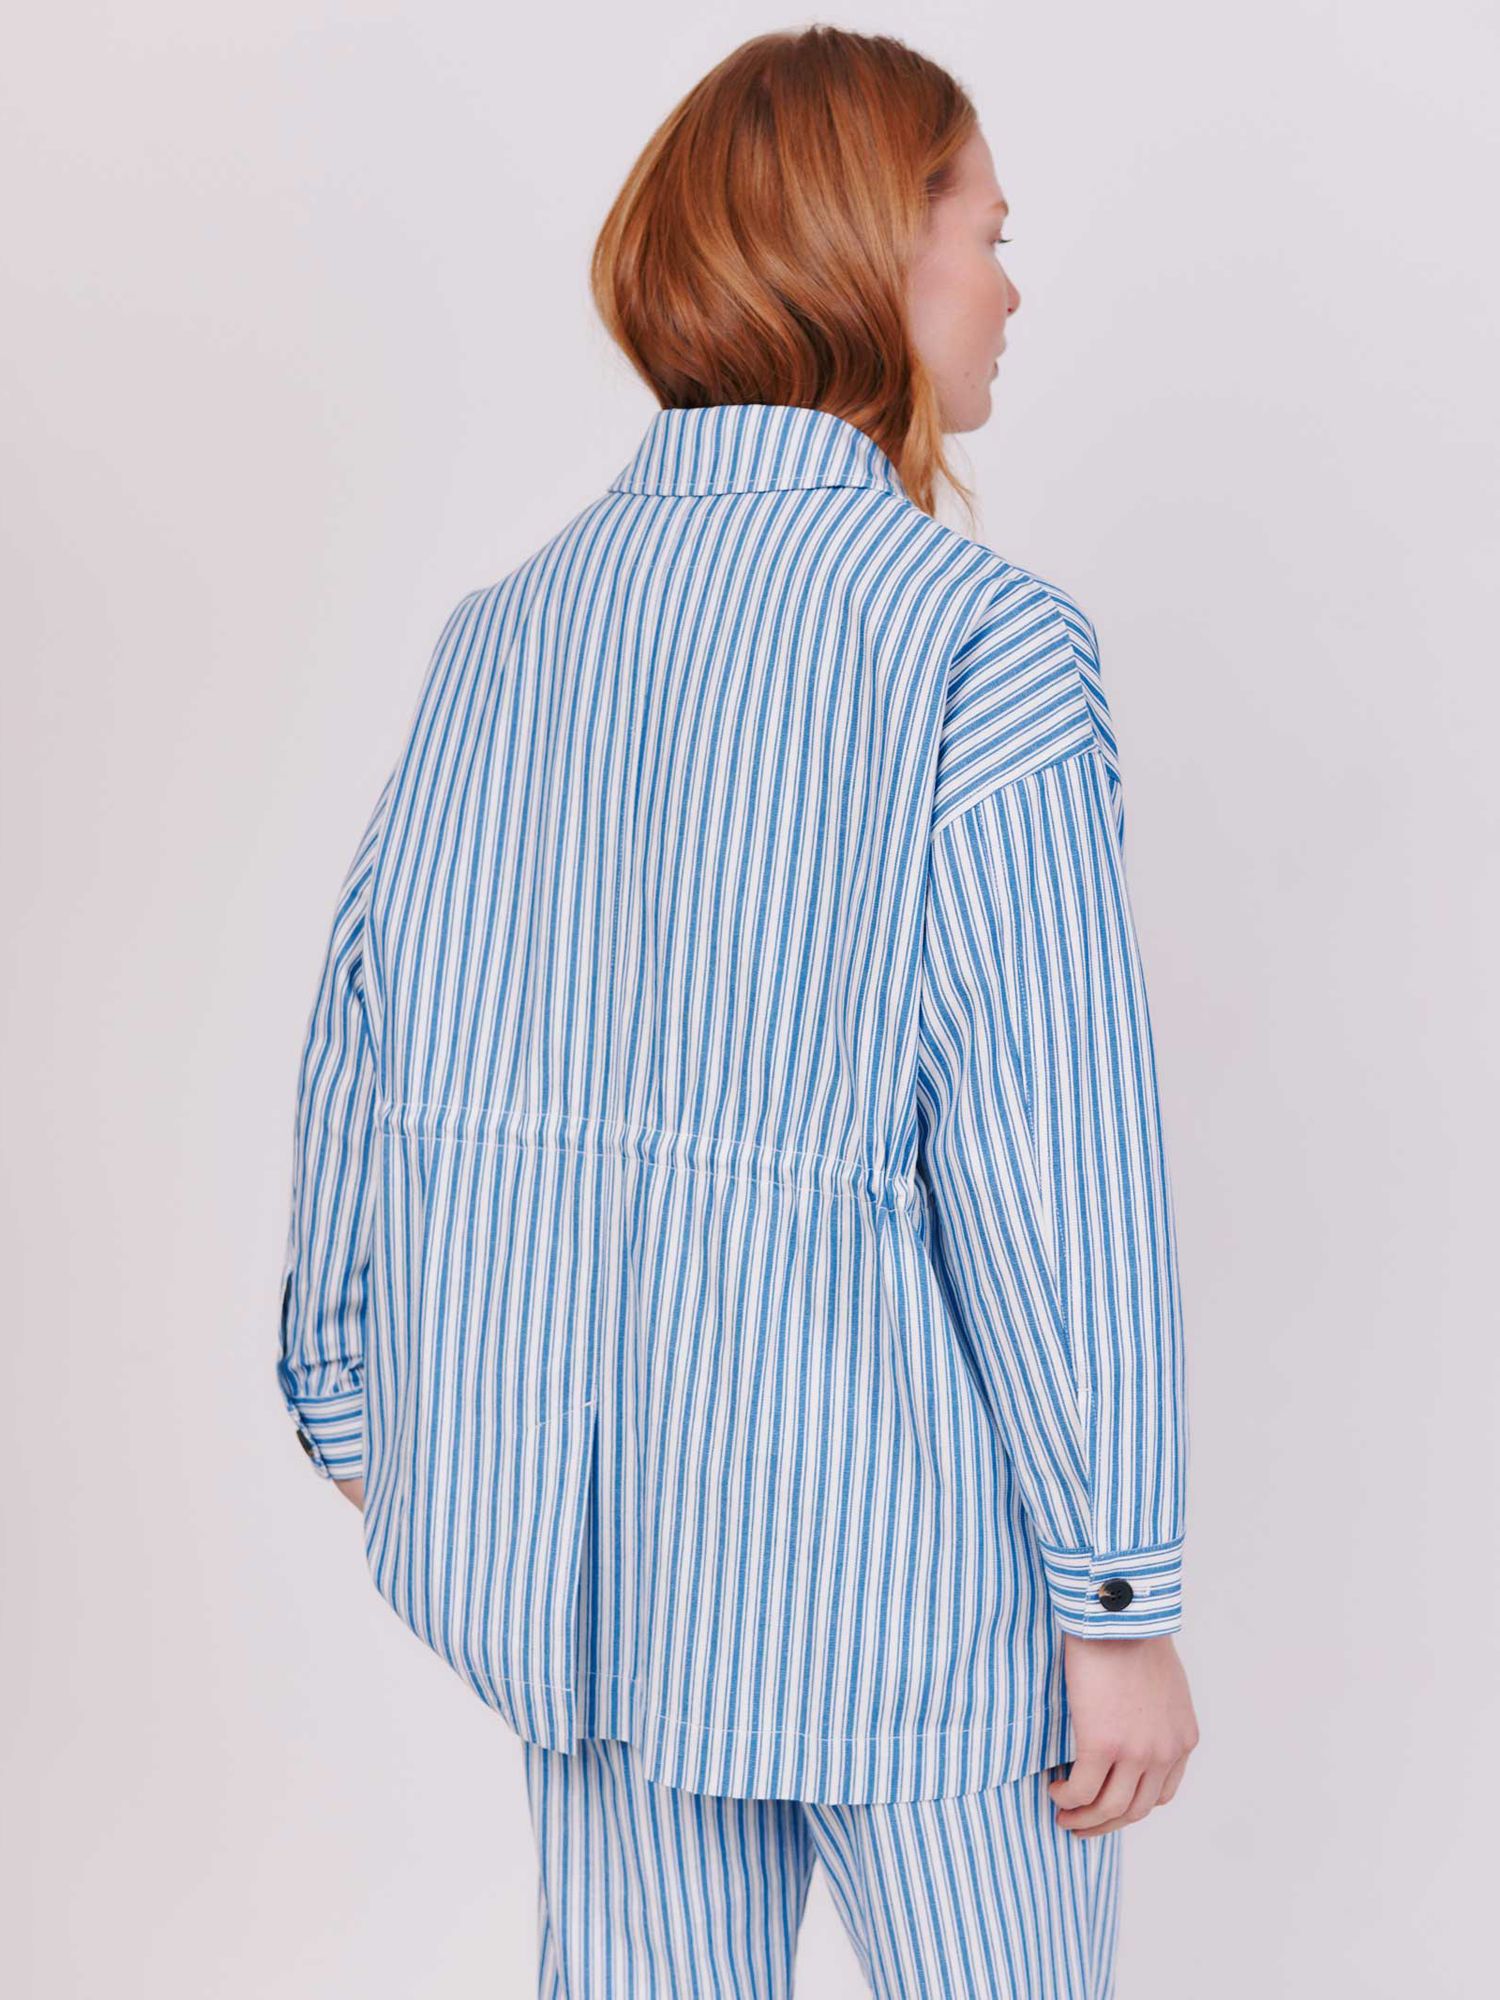 Buy Vivere By Savannah Miller Alice Gathered Striped Jacket, Indigo/White Online at johnlewis.com